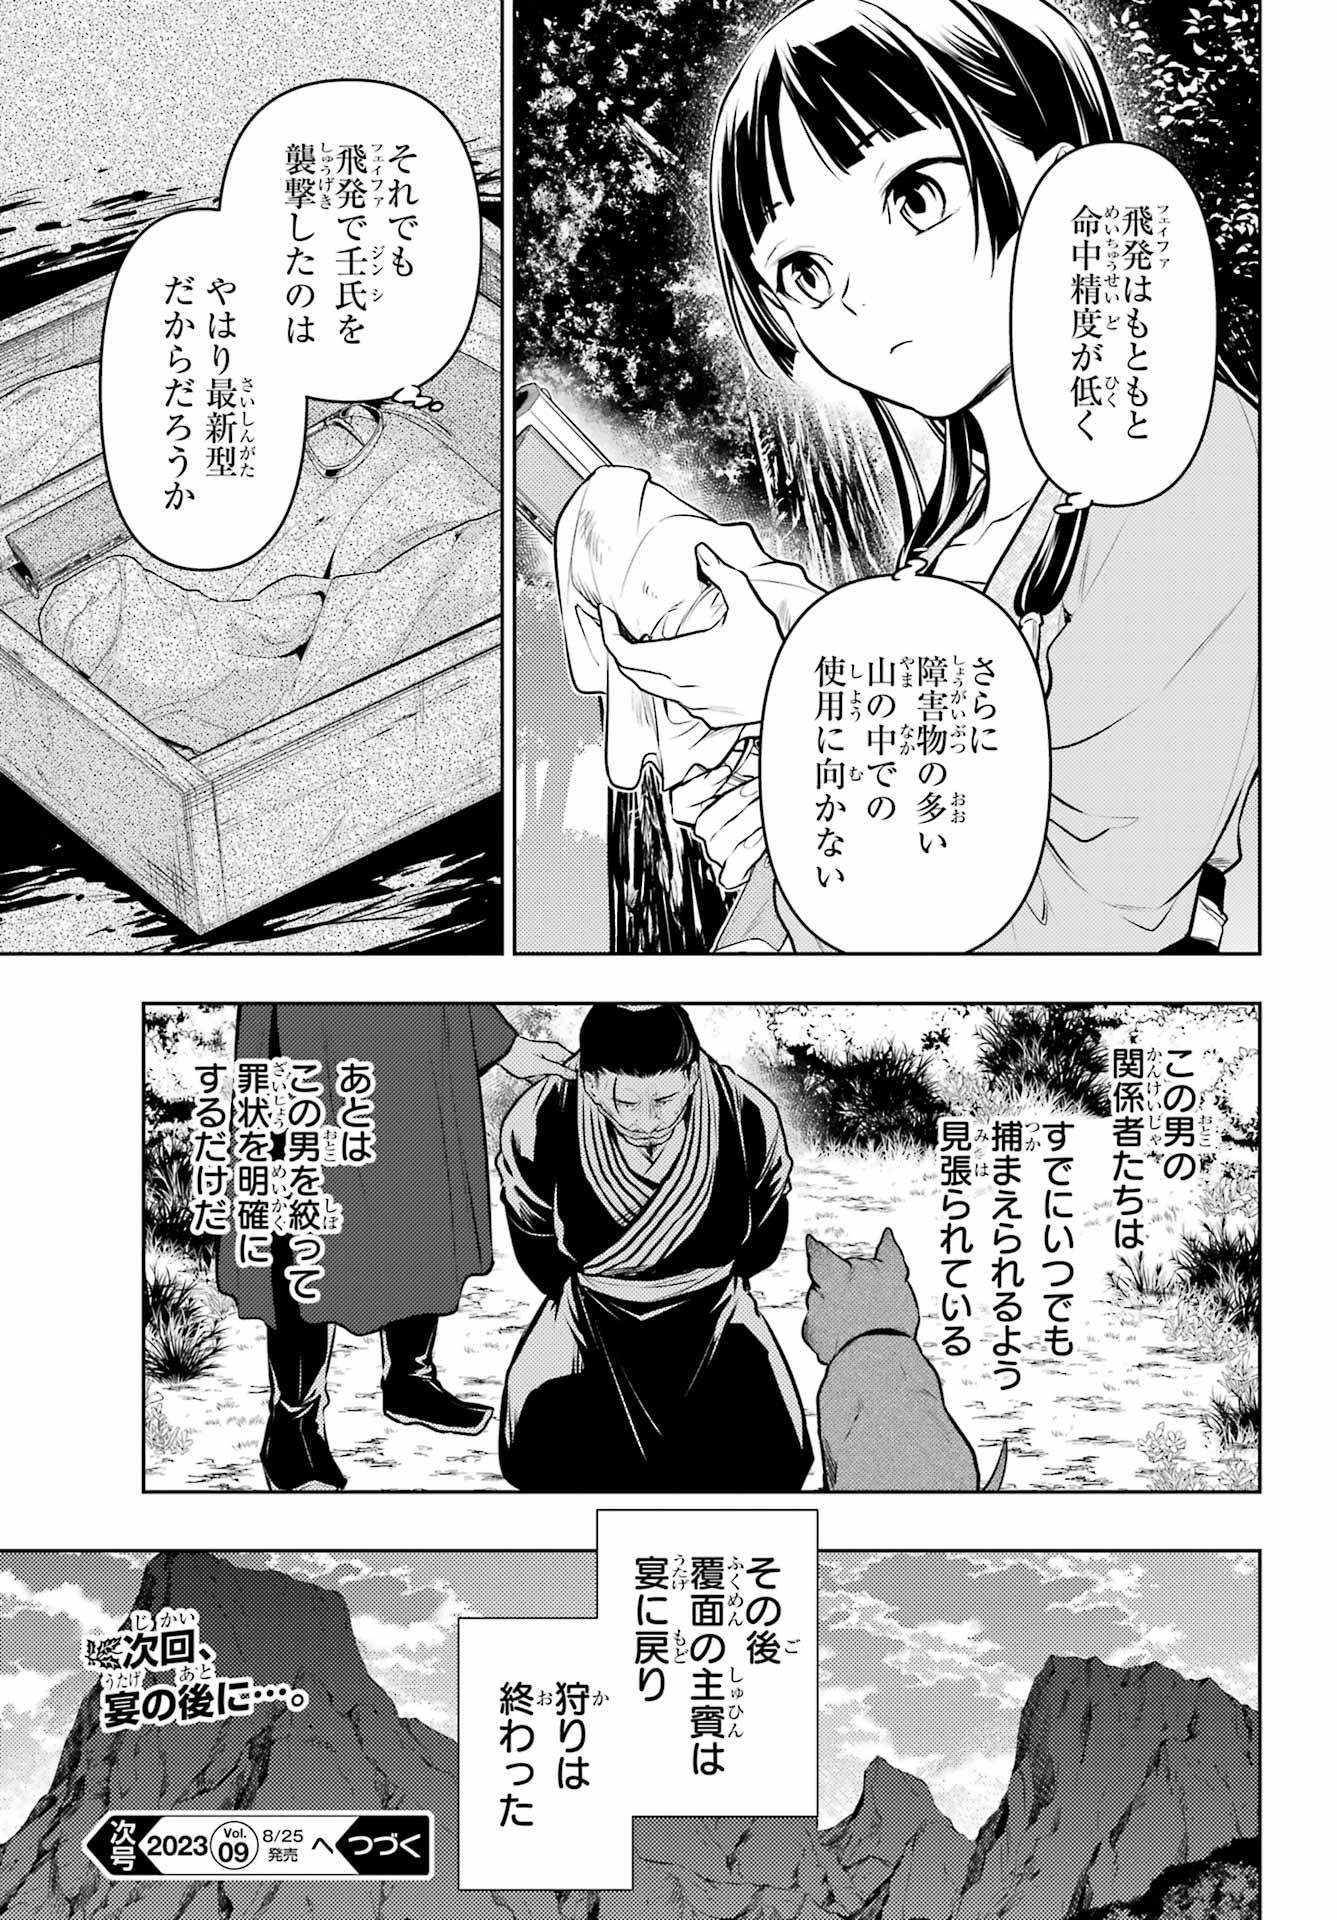 Kusuriya no Hitorigoto - Chapter 63-2 - Page 16